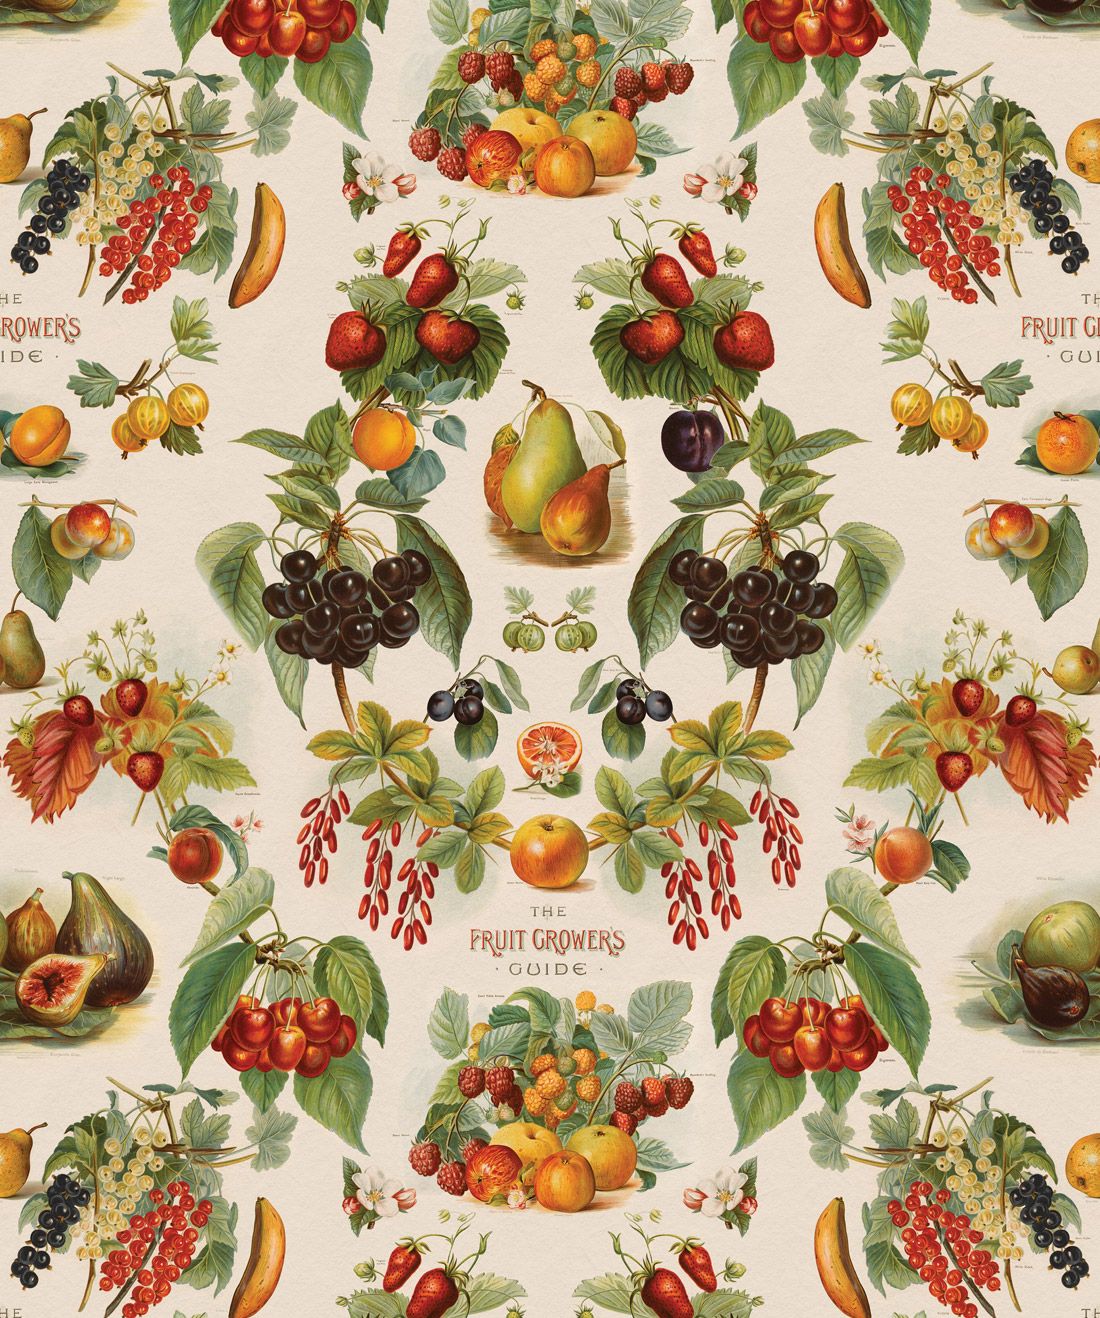 Fruit Growers Guide is a unique kitchen wallpaper